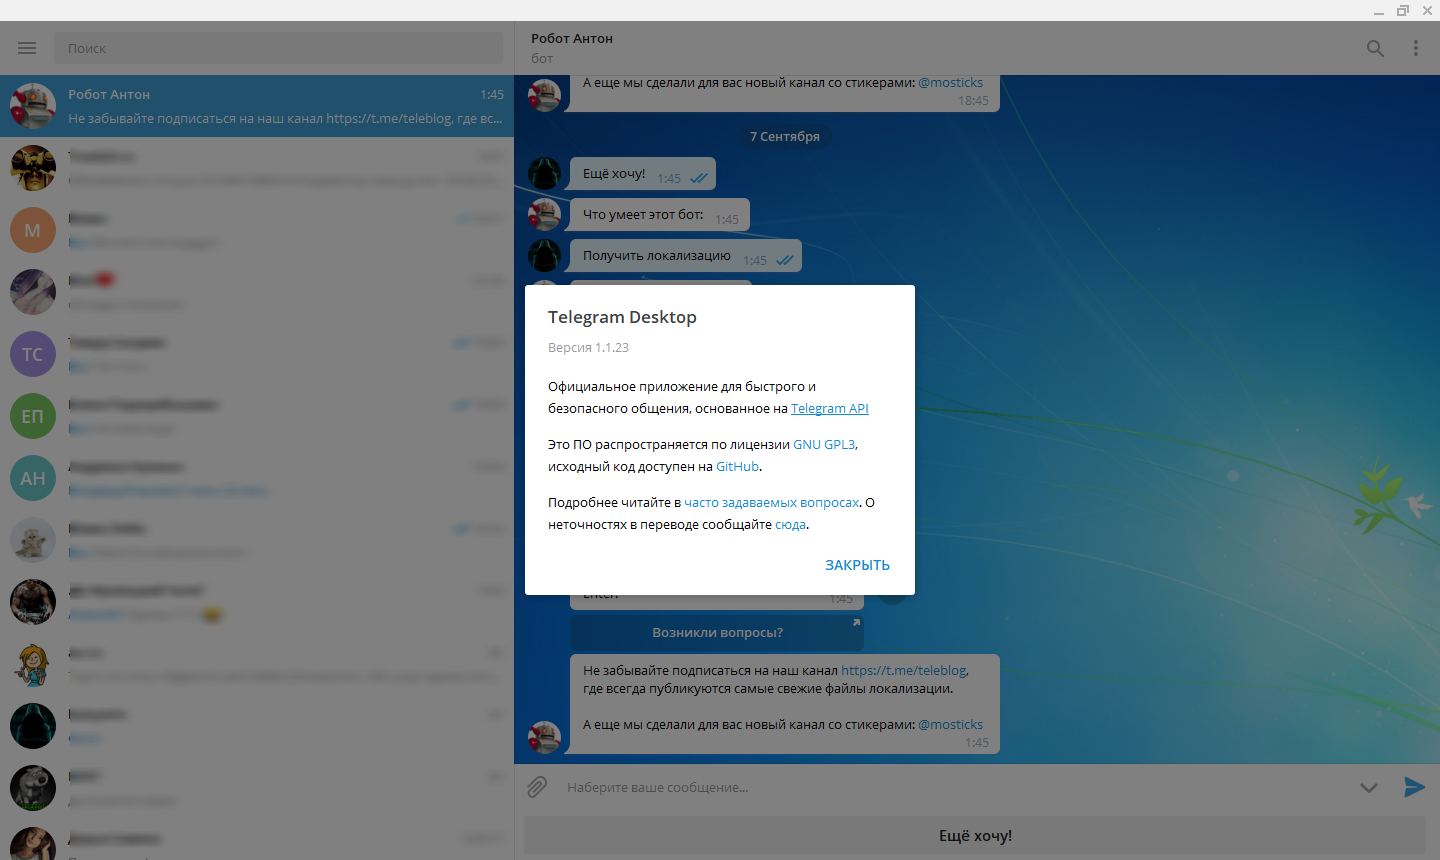 instal the last version for windows Telegram 4.10.2